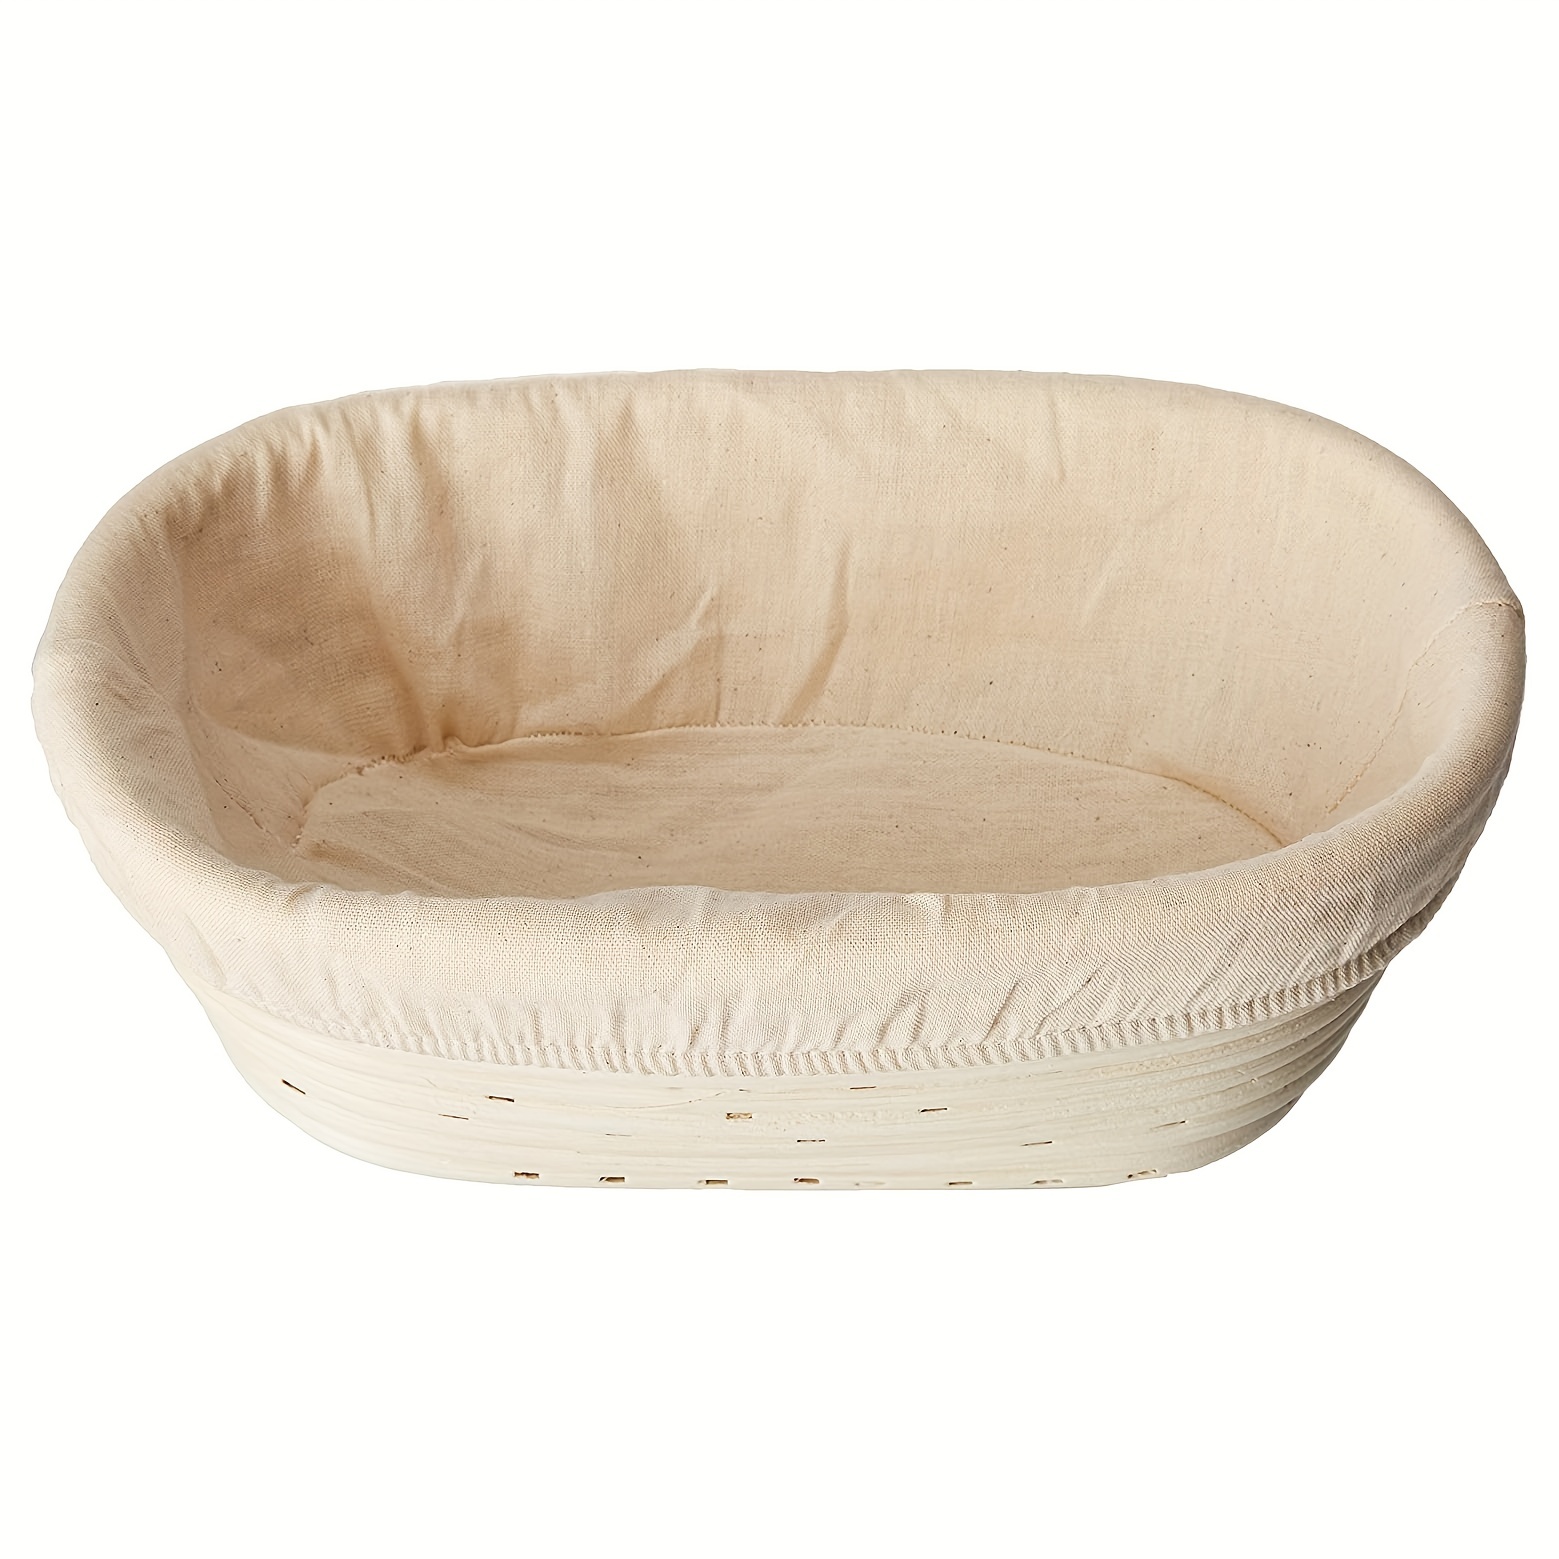 Sourdough Bread Baking Supplies Bread Proofing Basket With Liner Banneton  Brotform Baking Dough Proofing Basket 